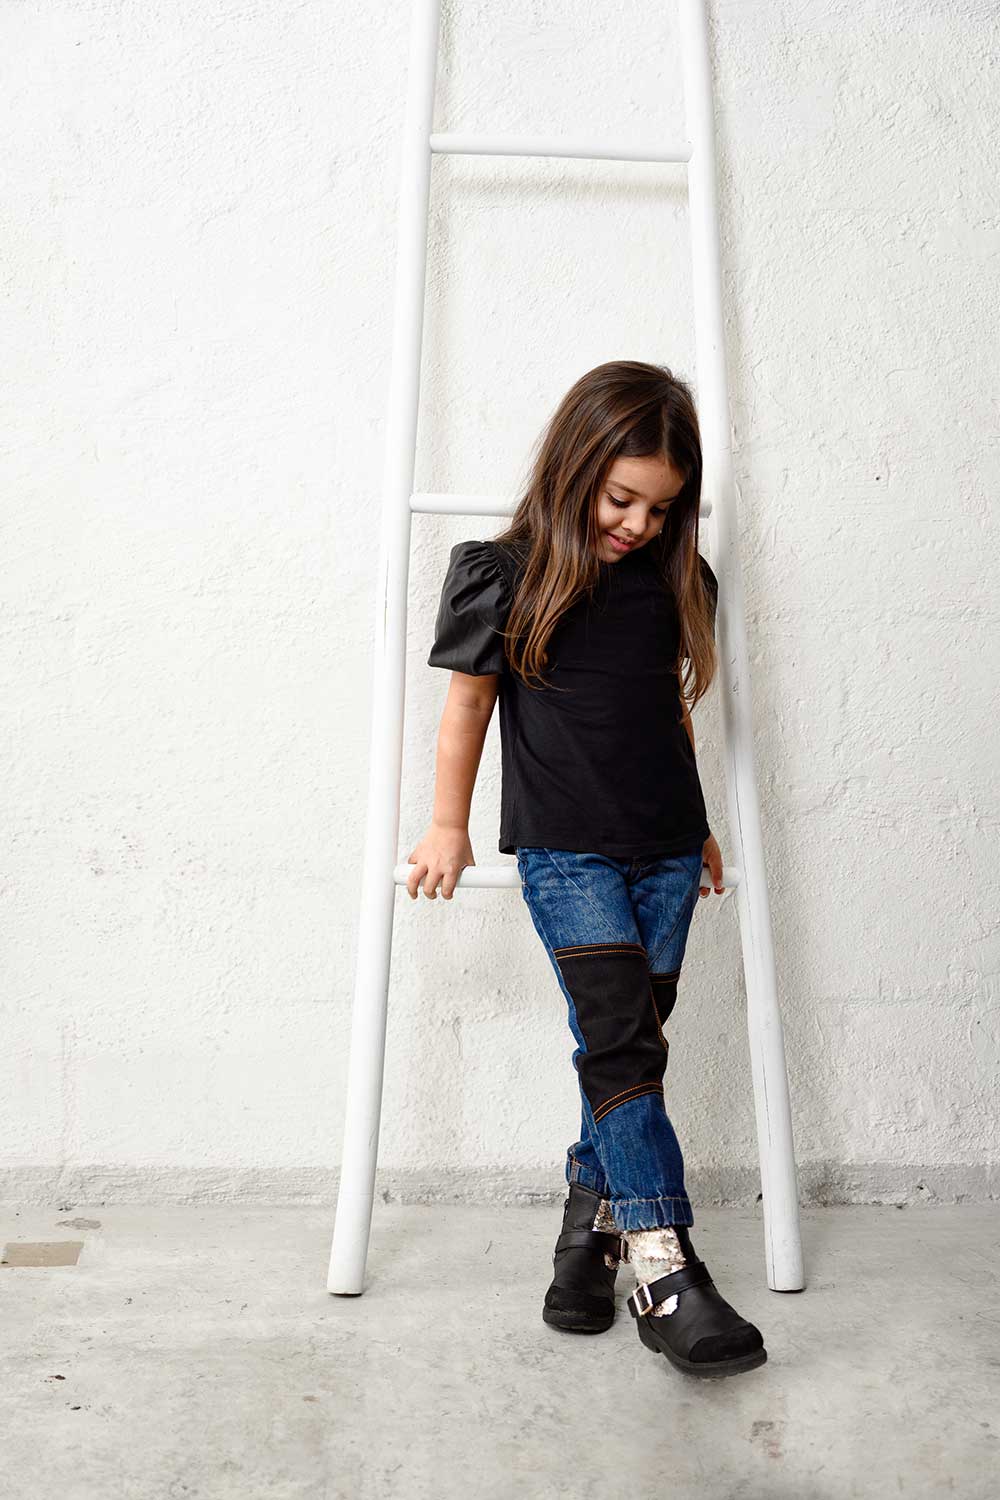 Nimble Patch - Fully Circular Kids\' Jeans | CWB Magazine